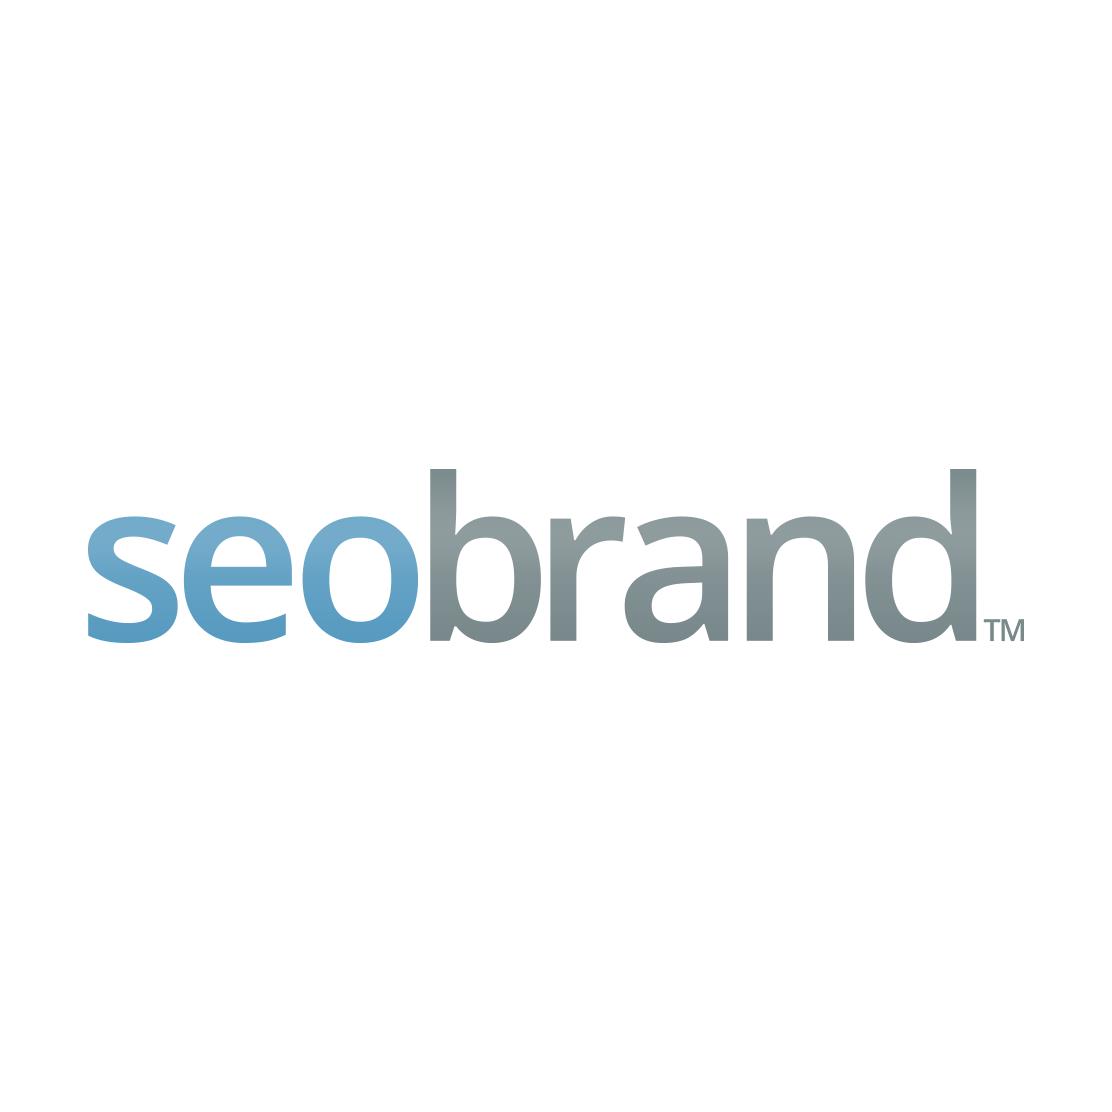 Top Reputation Management Agency Logo: SEO Brand